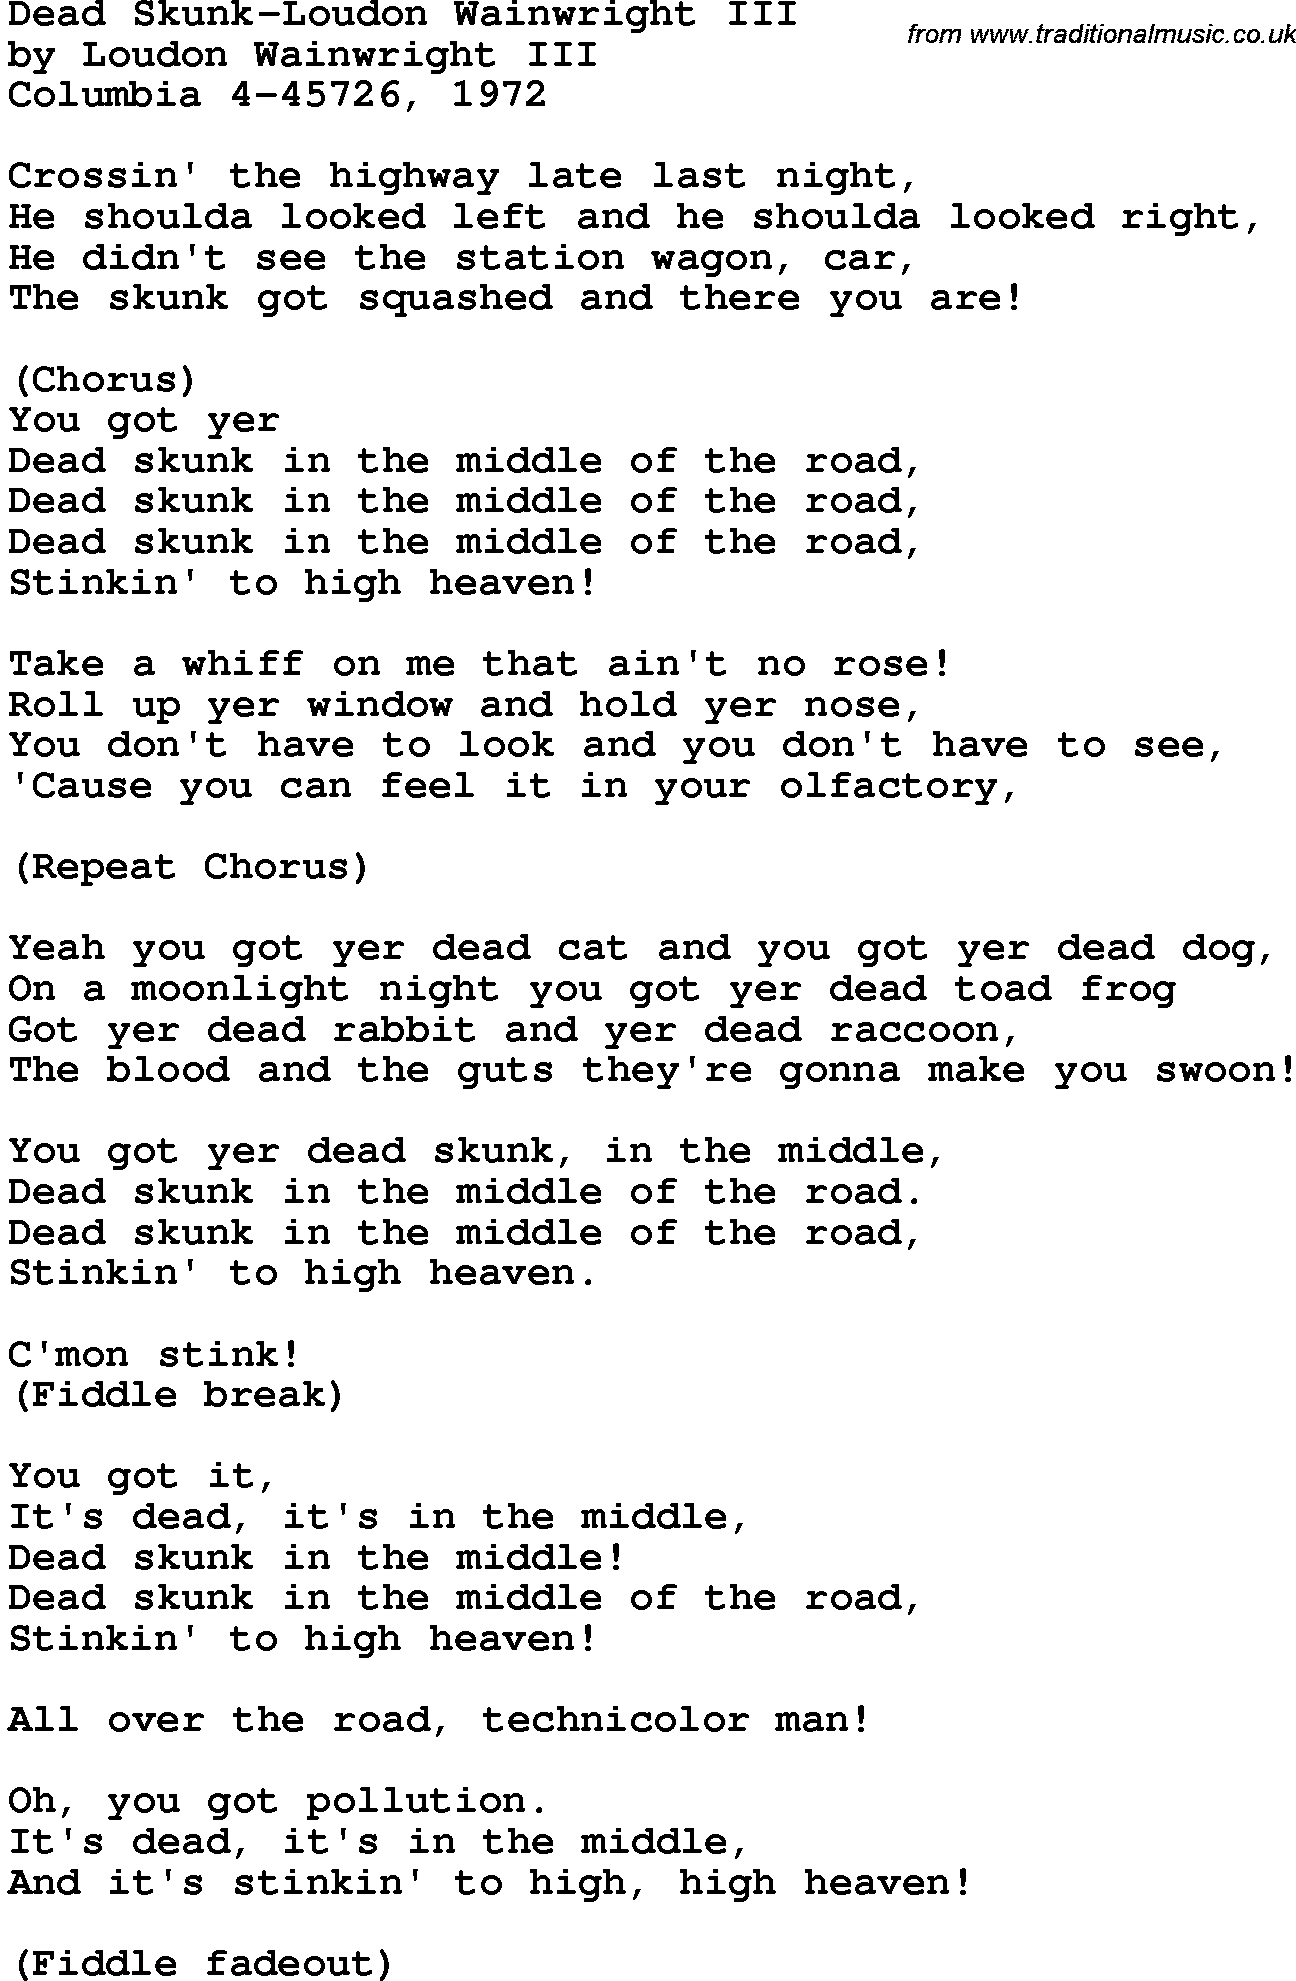 Novelty song: Dead Skunk-Loudon Wainwright Iii lyrics